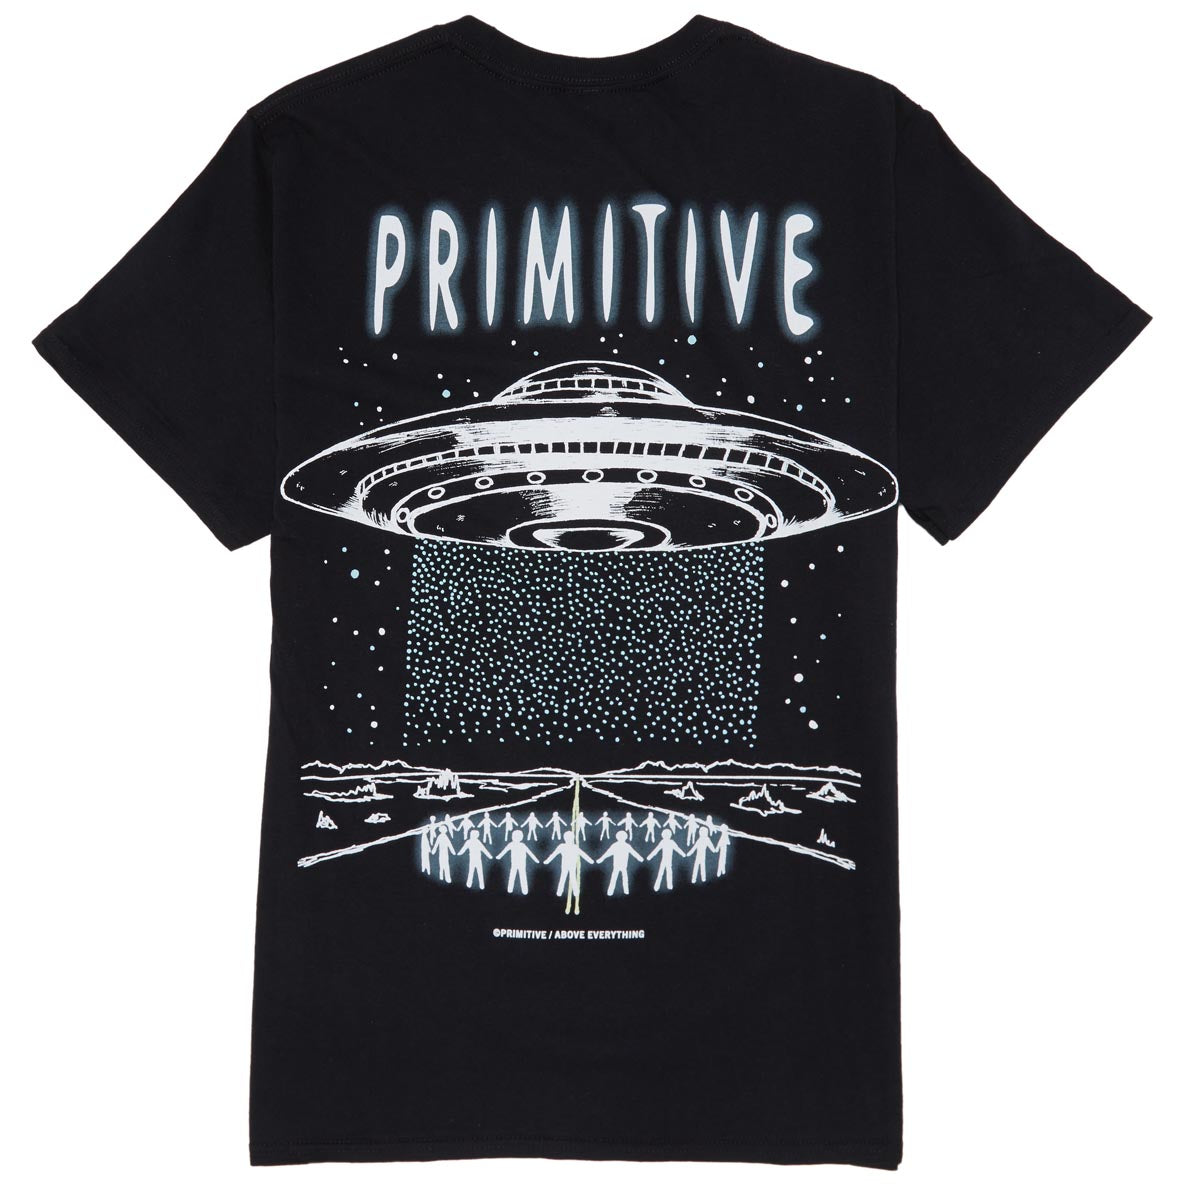 Primitive Contact T-Shirt - New Black image 1